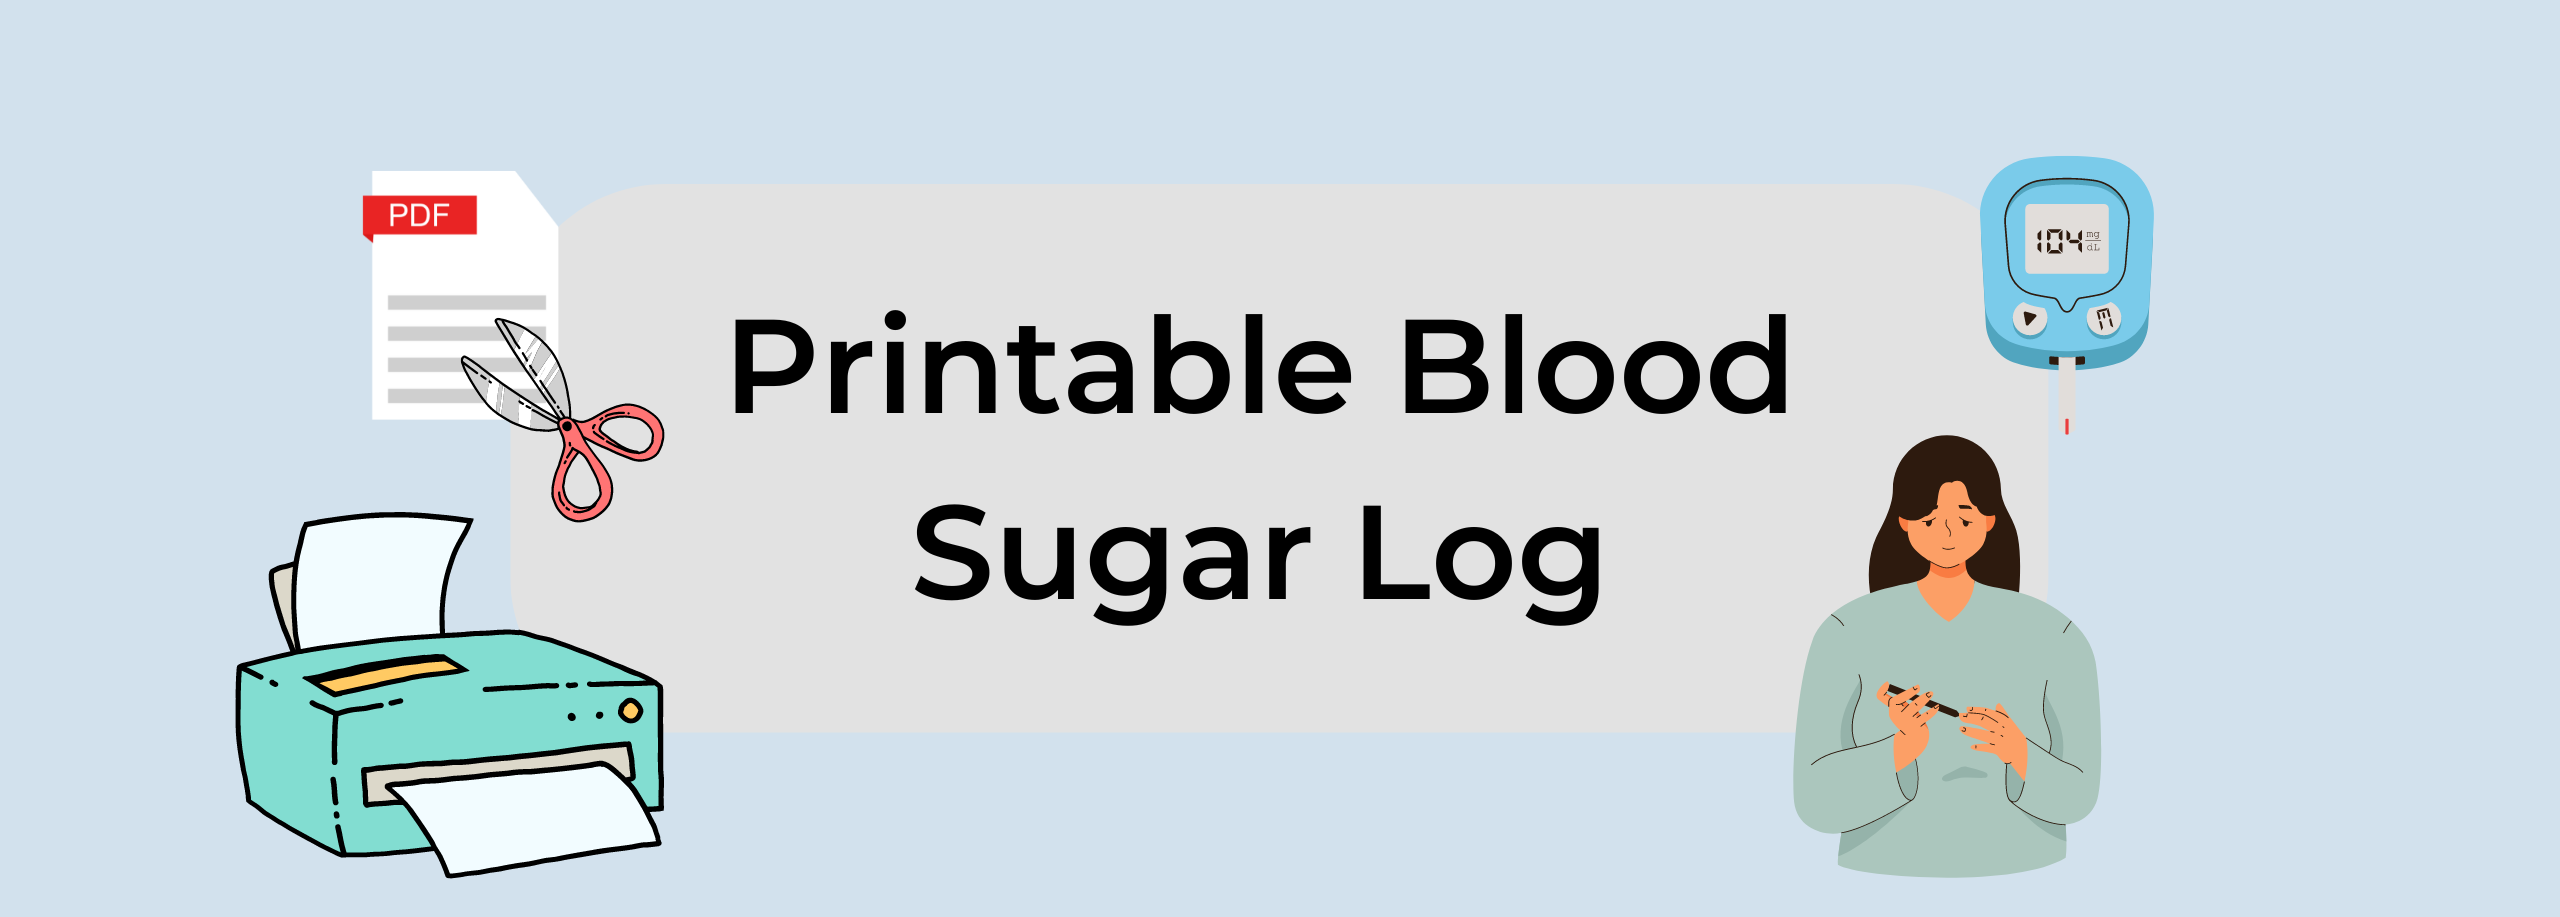 printable blood sugar log